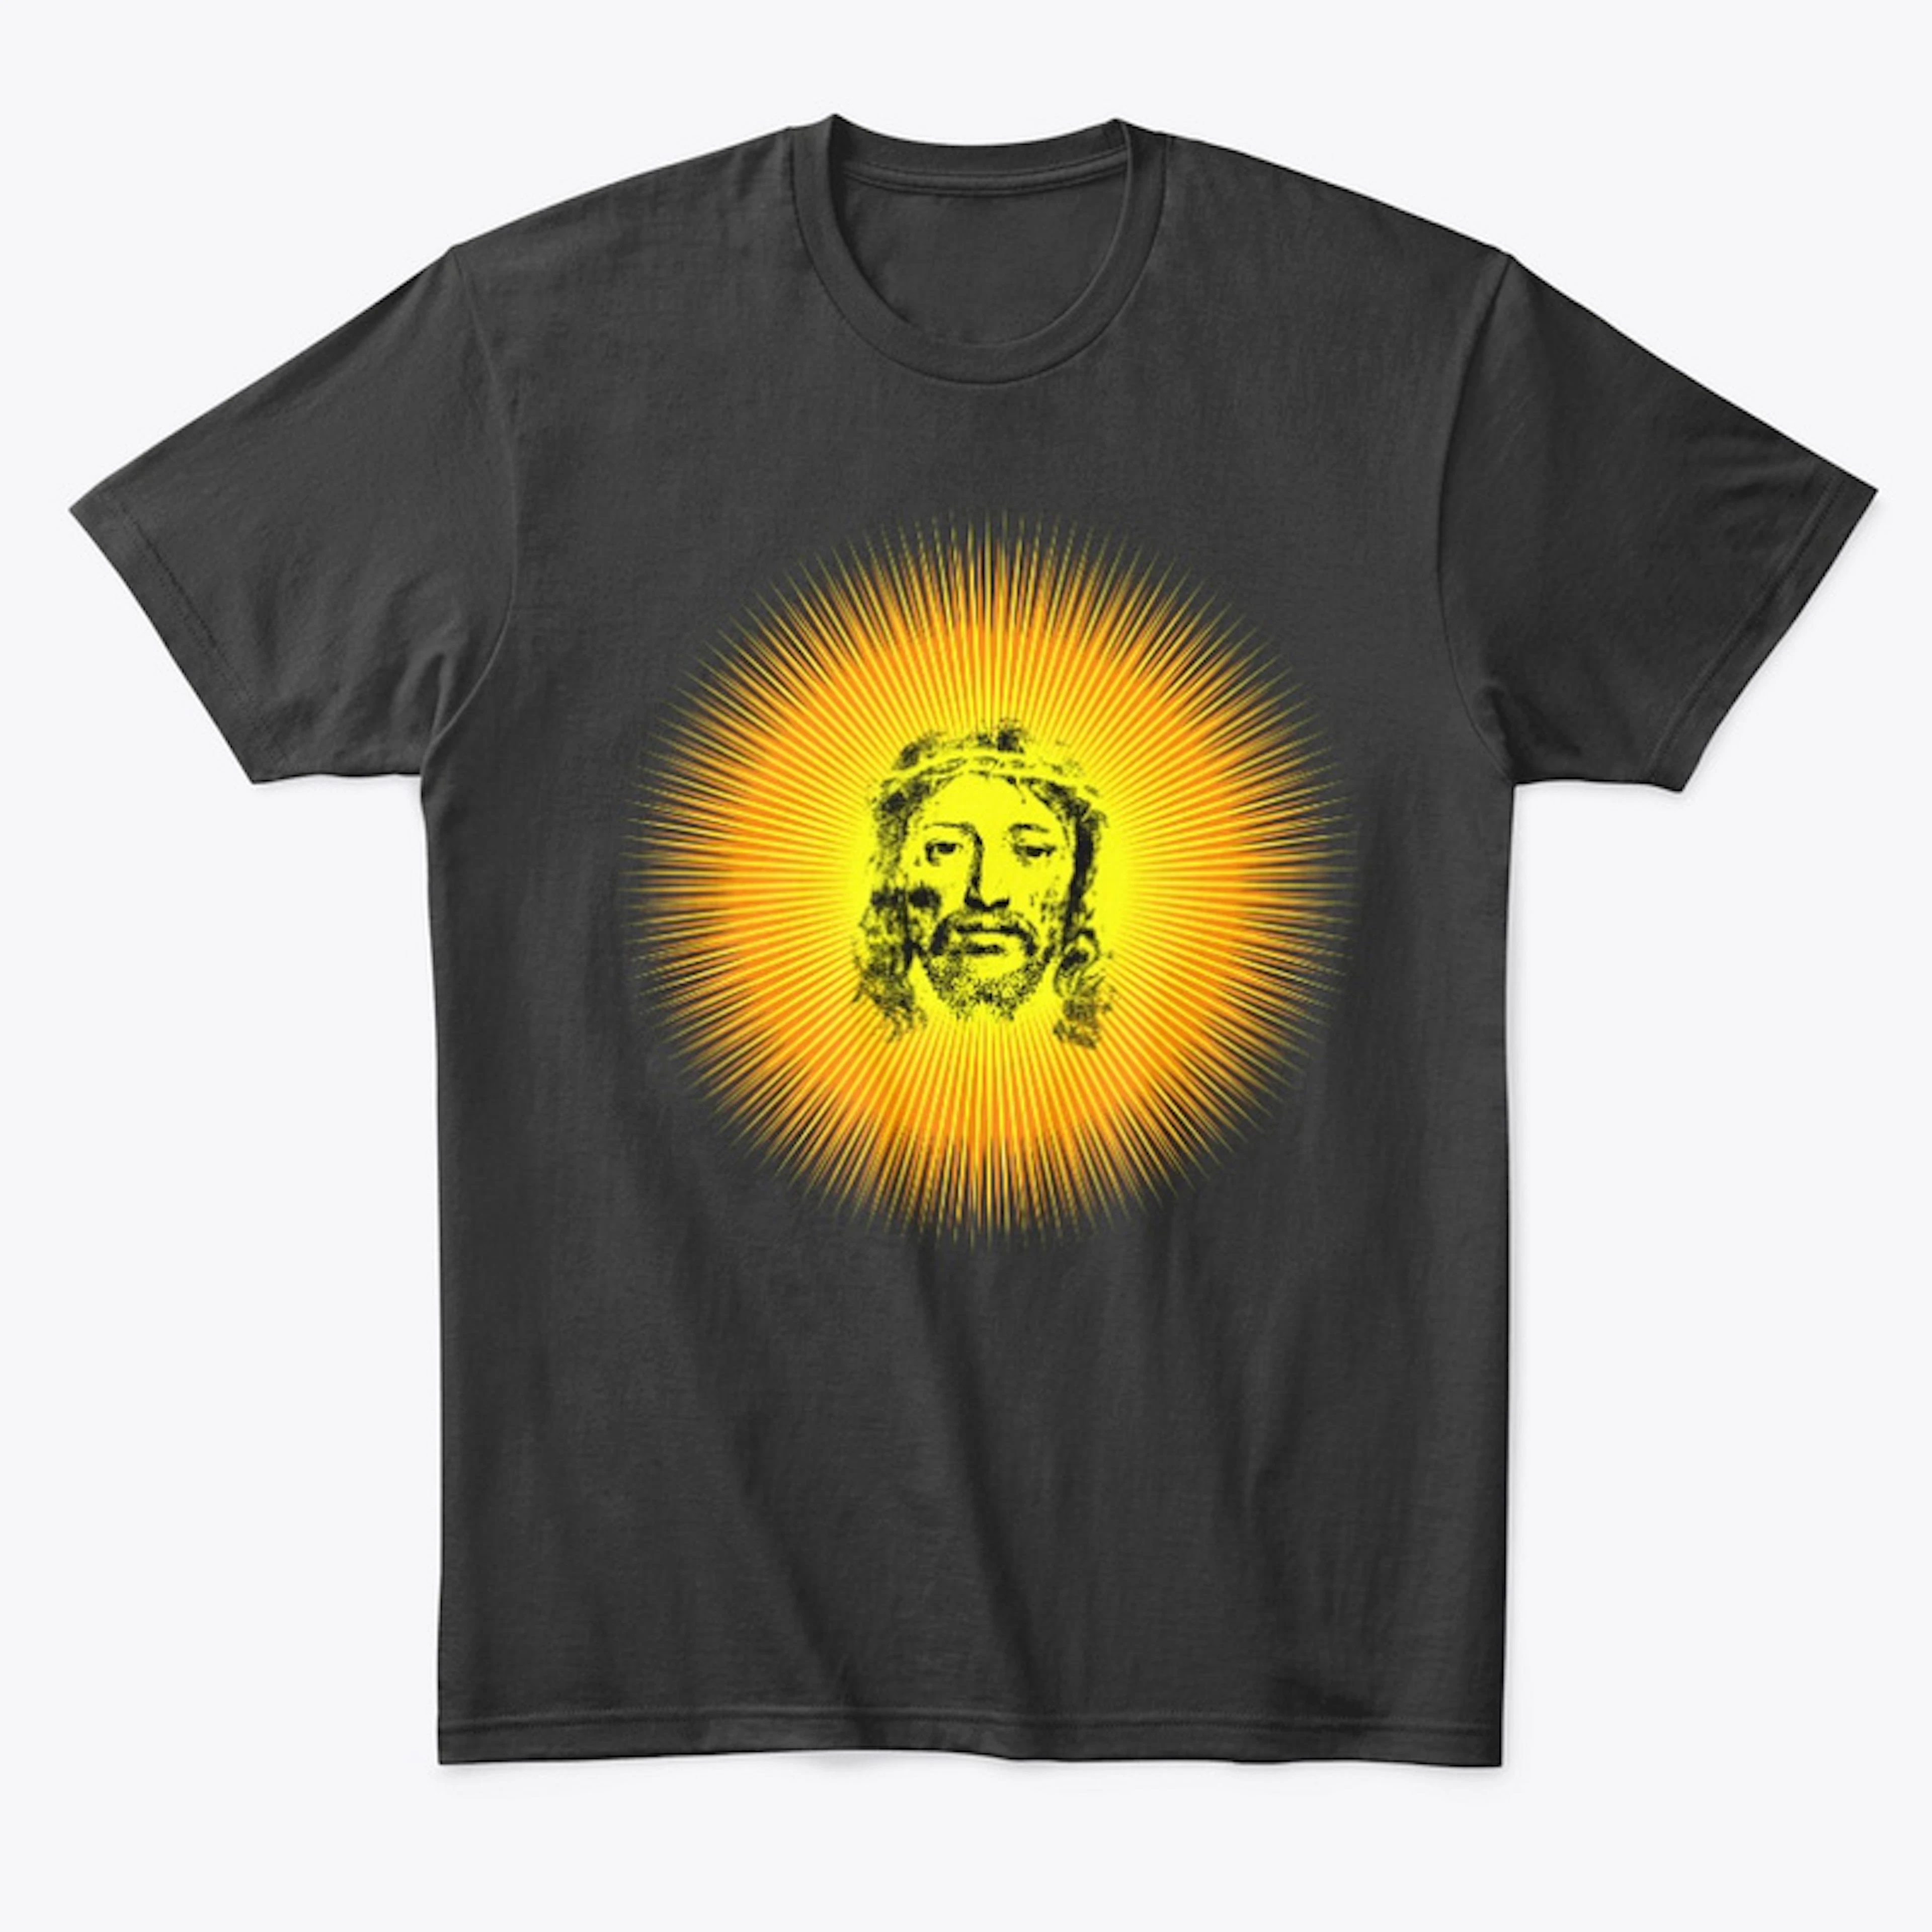 Jesus in the Sun